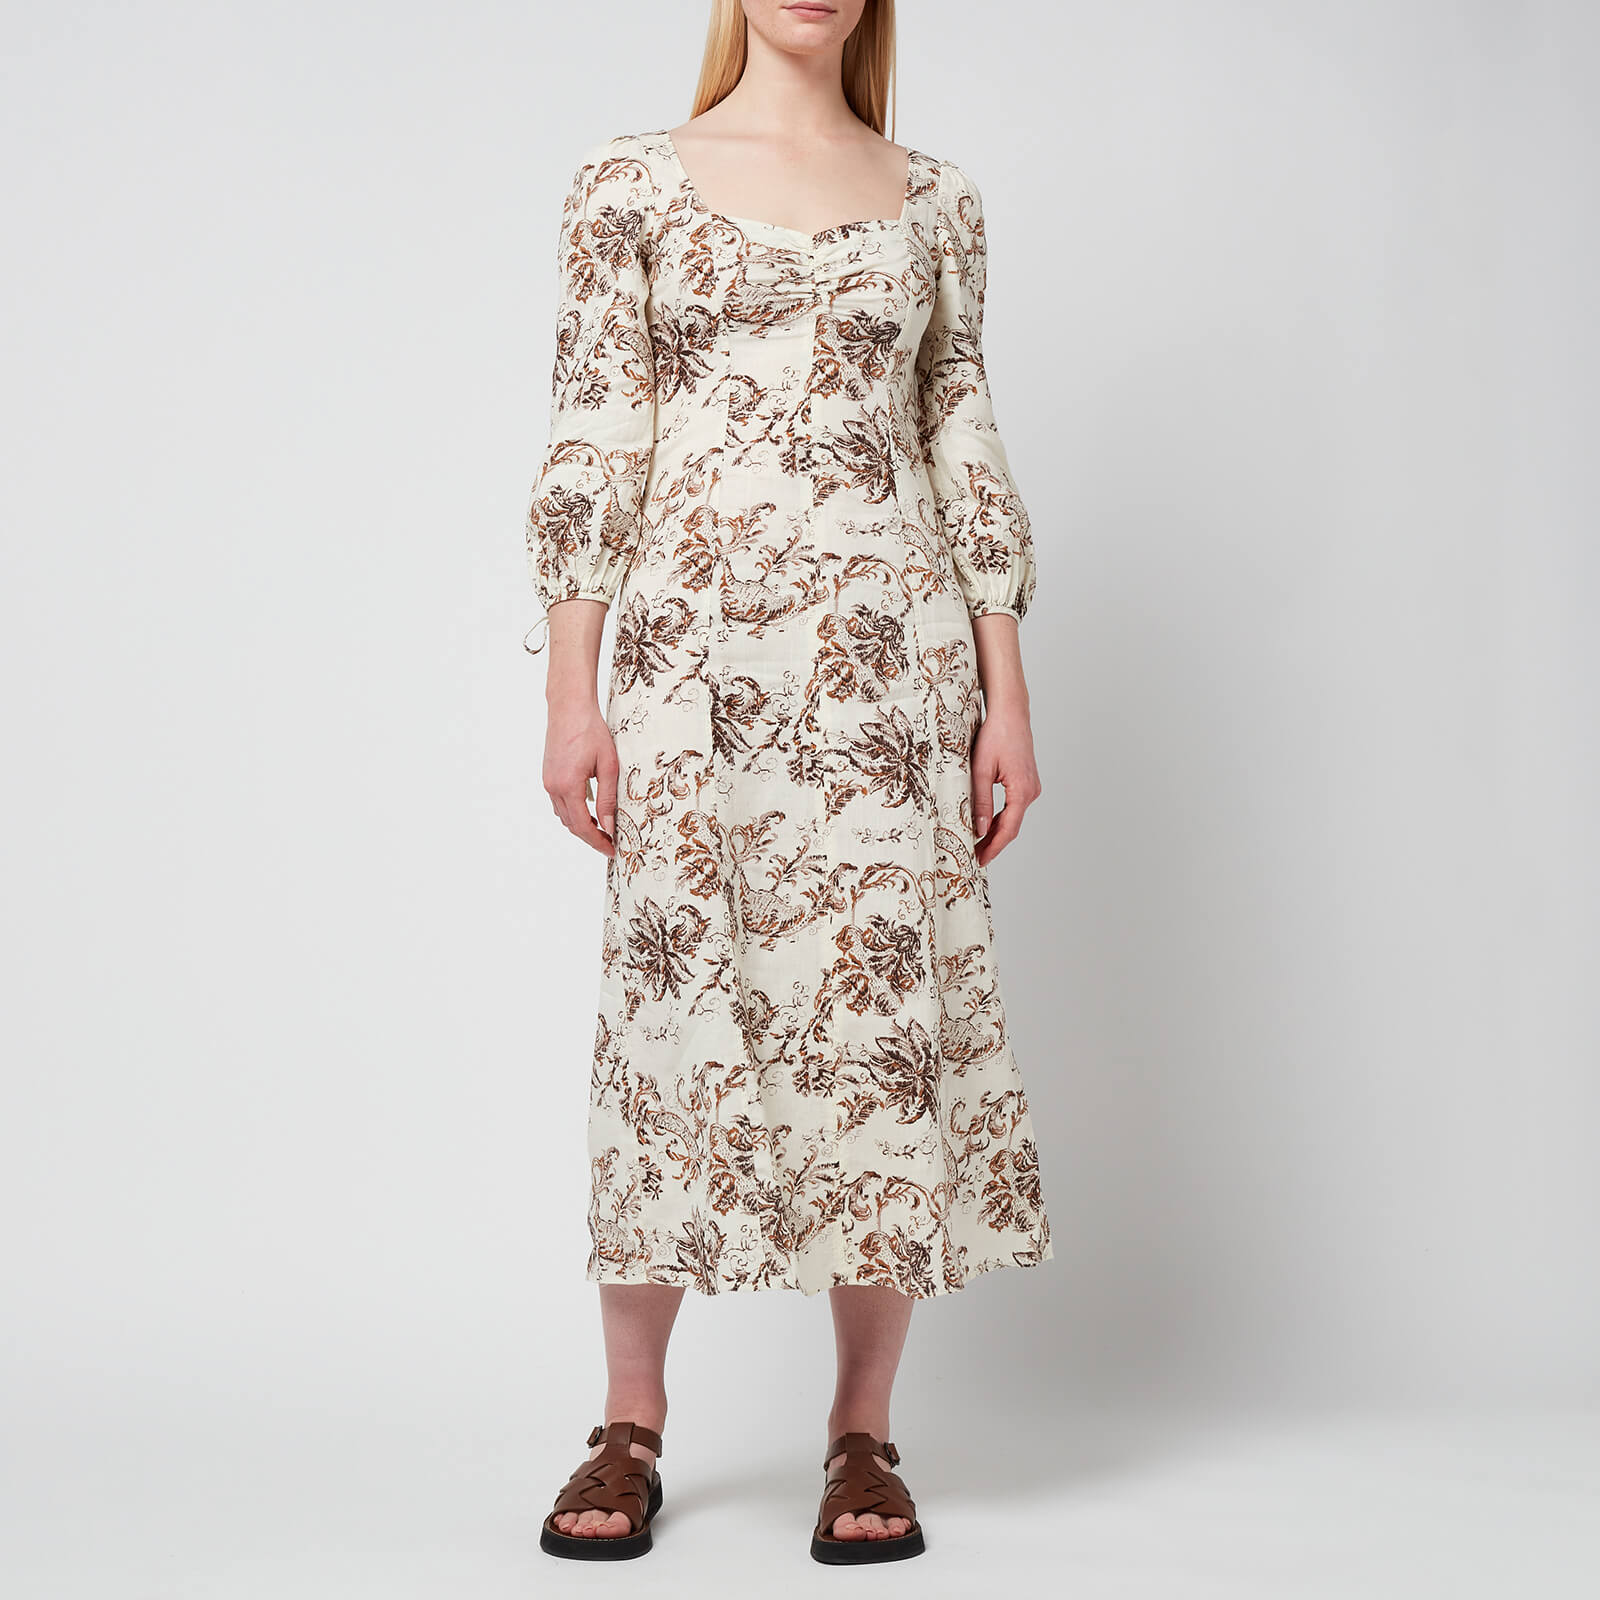 Whistles Women's Hallie Rococo Floral Linen Dress - Multi - UK 6